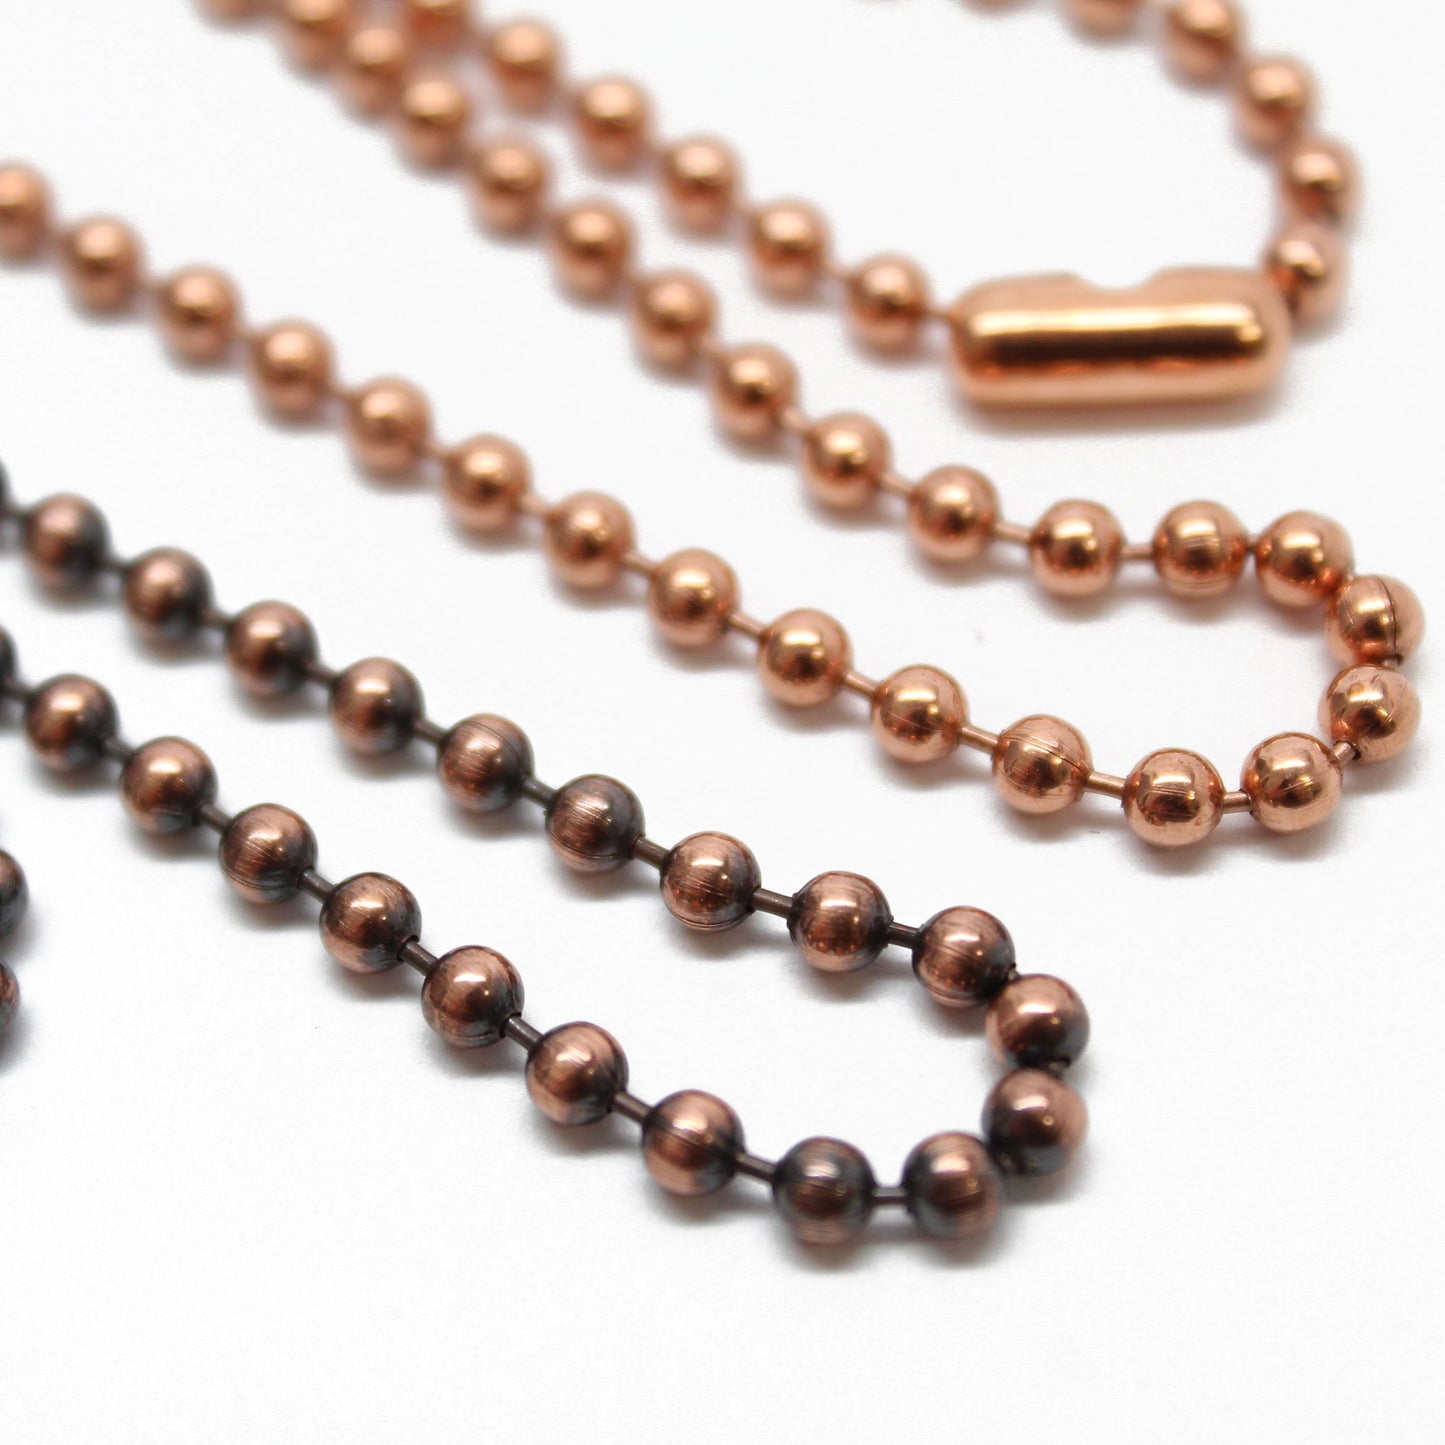 Bulk Antique Copper Ball Chain Necklaces 24 - Select Quantity Pack of 10